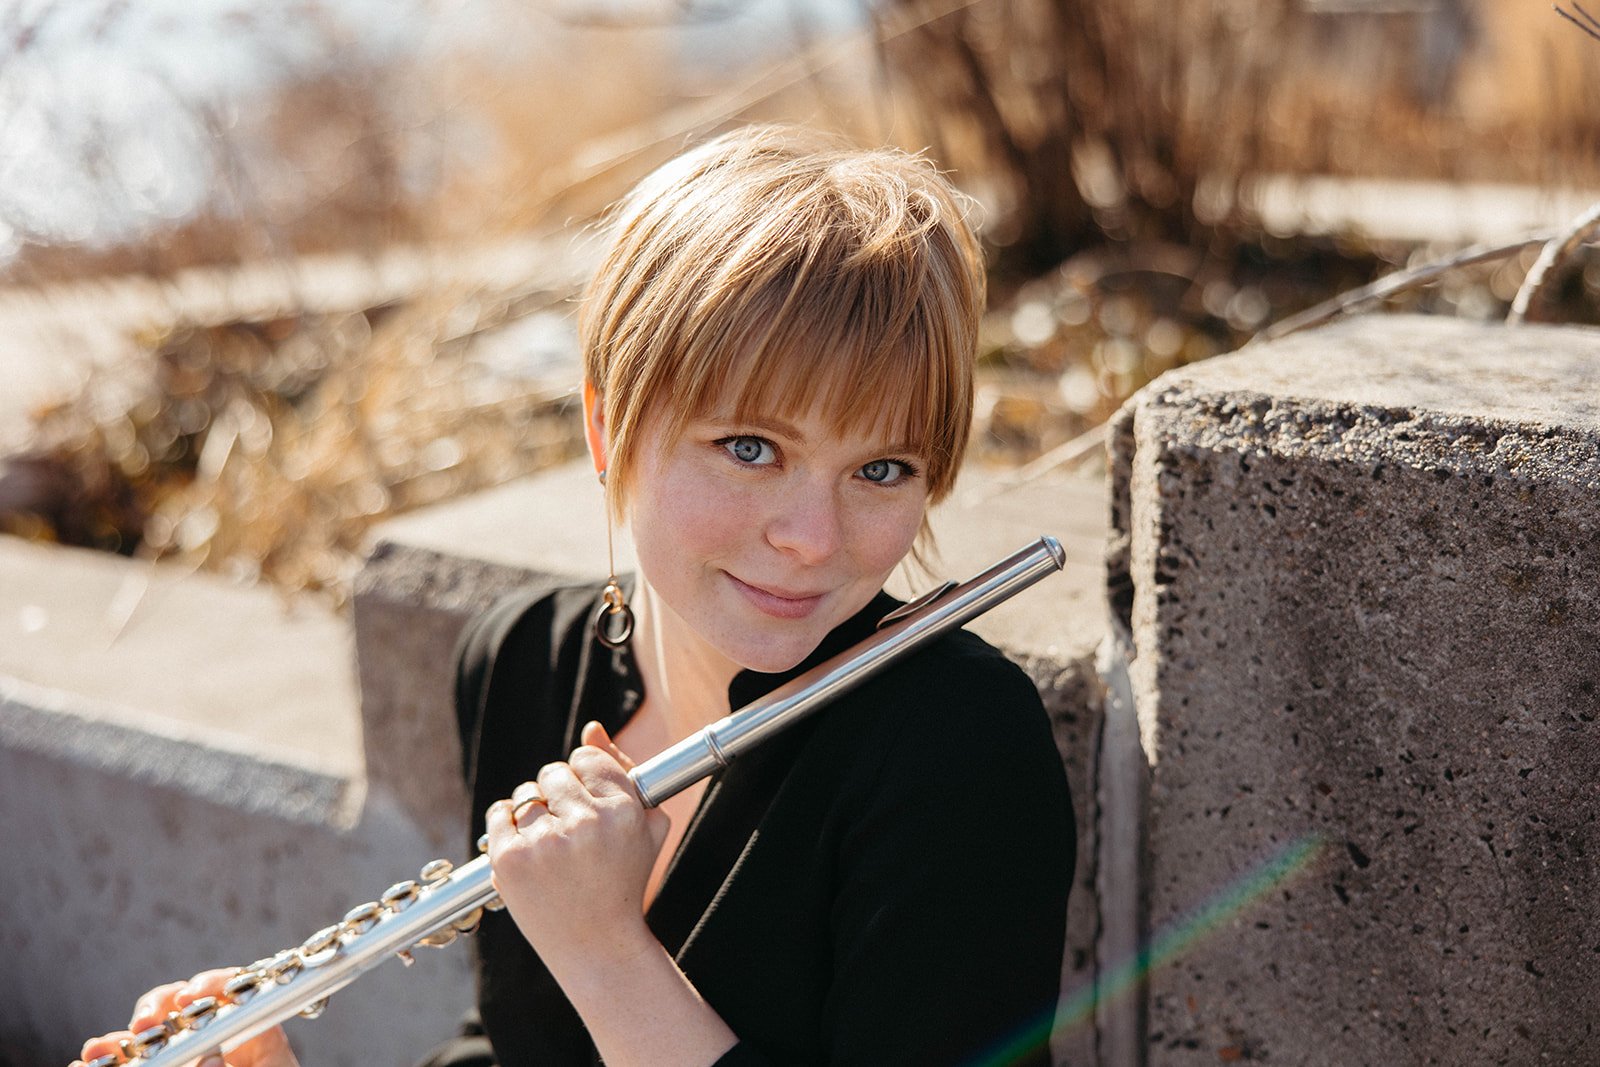 11AM ET "Flute Pedagogy as a Creative and Healing Practice", Aimee Toner